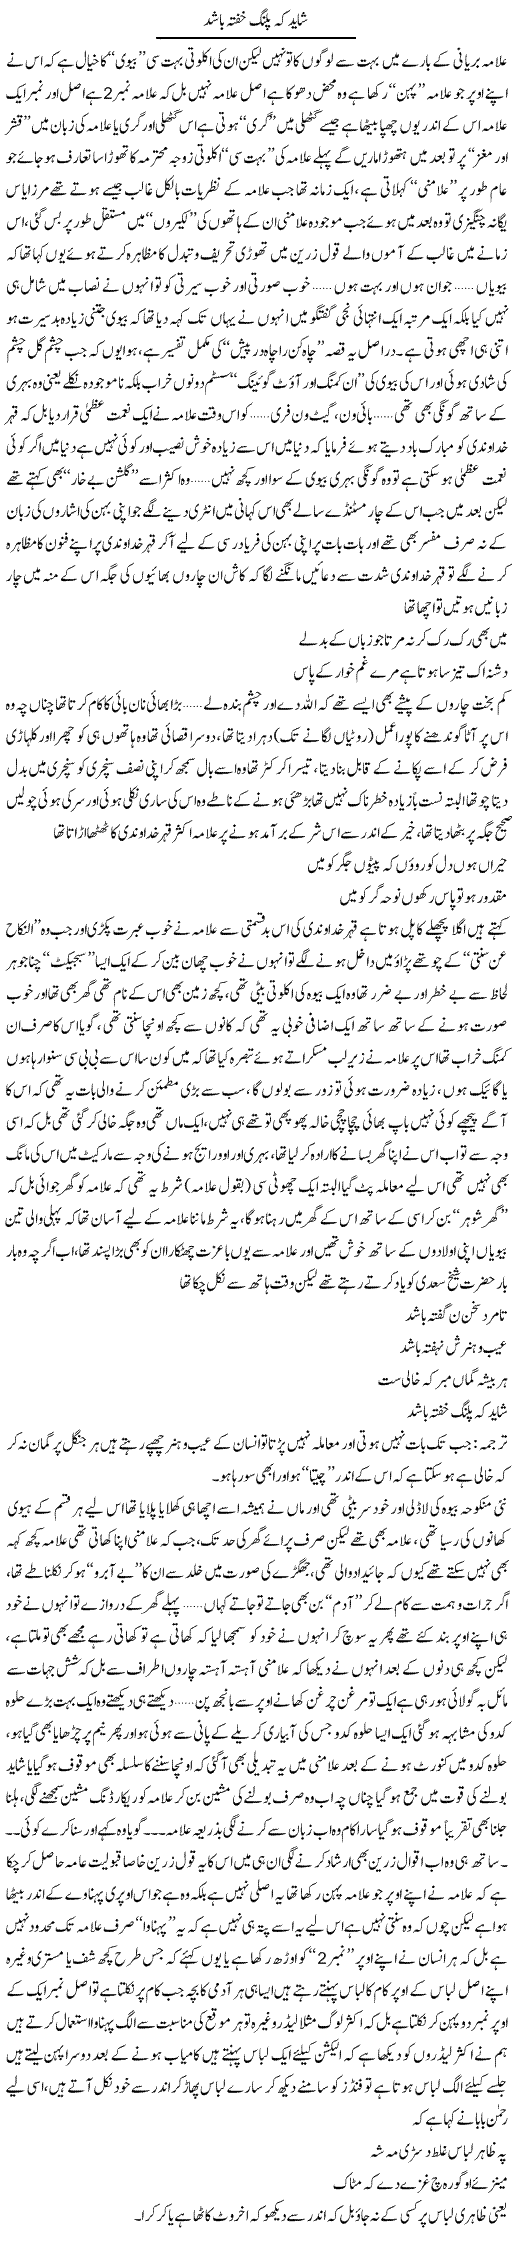 Shayad K Palang Khufta Bashud | Saad Ullah Jan Barq | Daily Urdu Columns